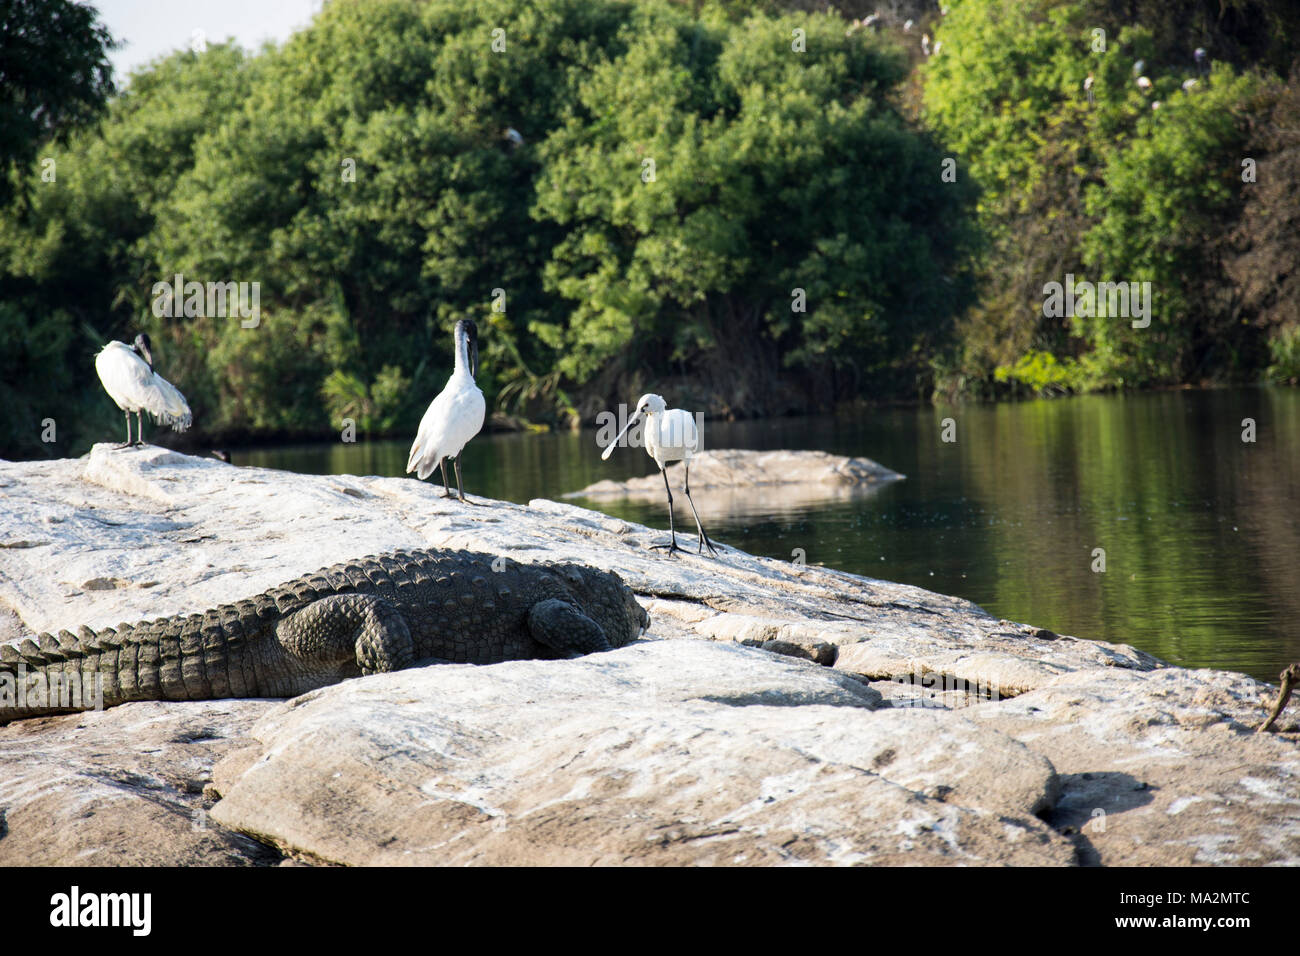 Crocodiles chilling out at Ranganathitu Birds sanctuary. Mandya, Karnataka, India. Stock Photo